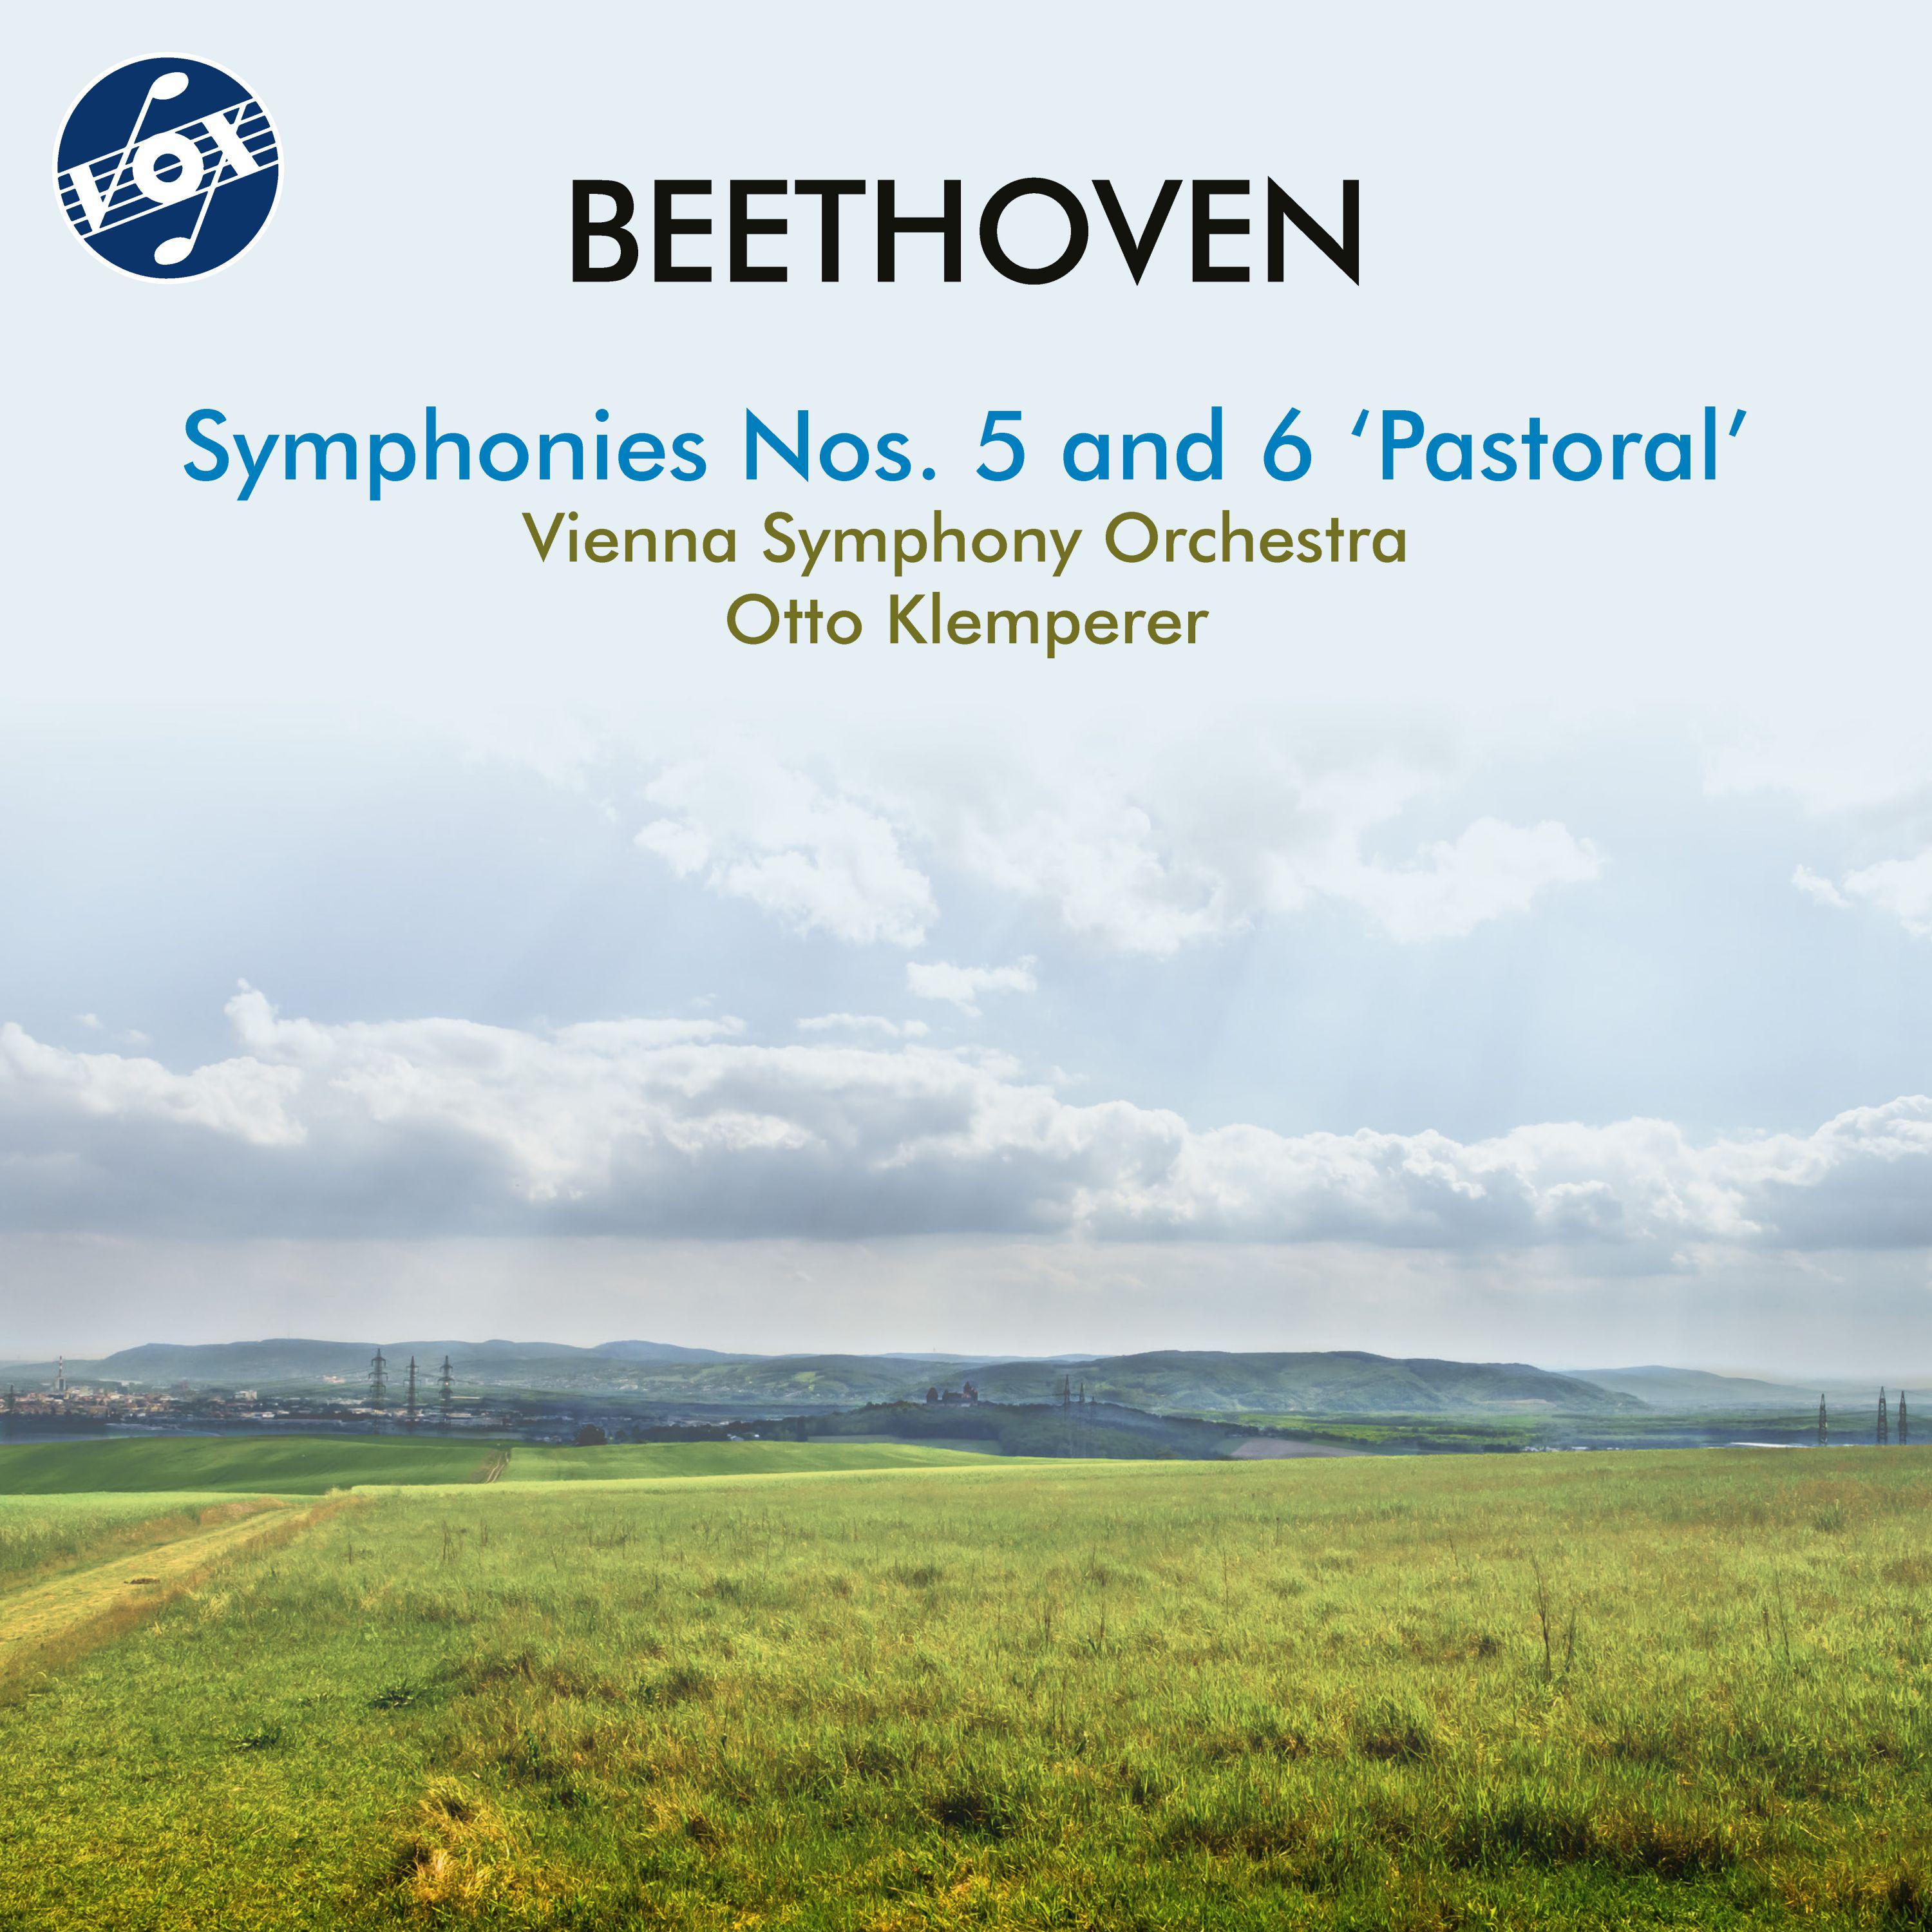 Vienna Symphony Orchestra - Symphony No. 6 in F Major, Op. 68, 